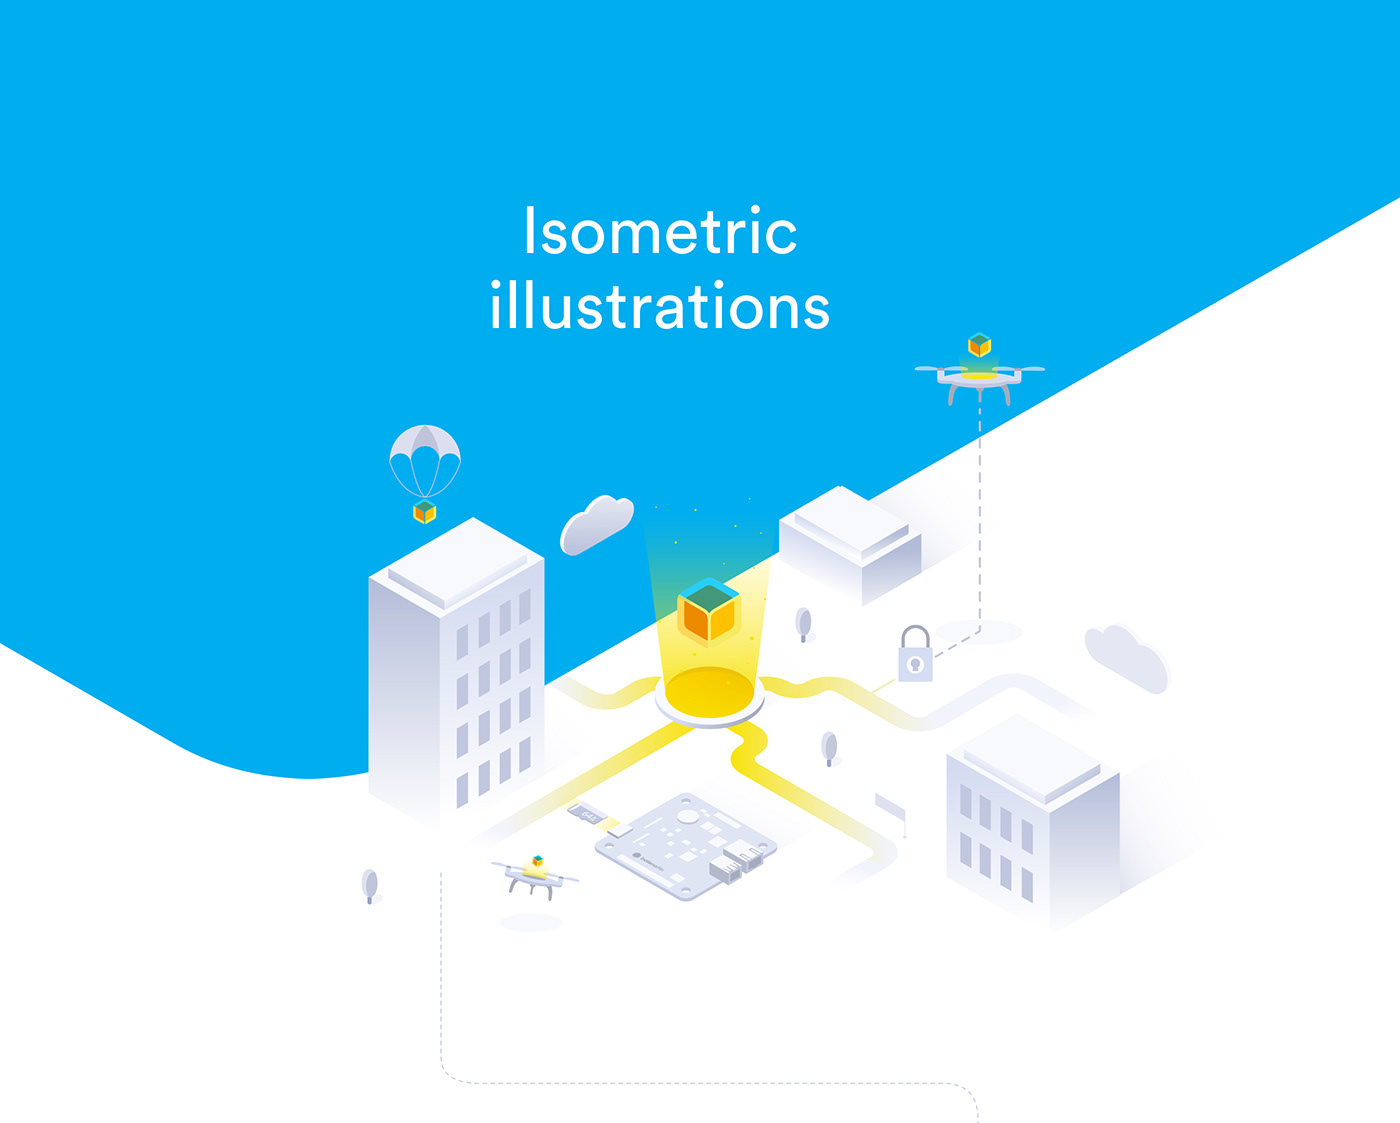 Isometric ILLUSTRATION  software IoT concept